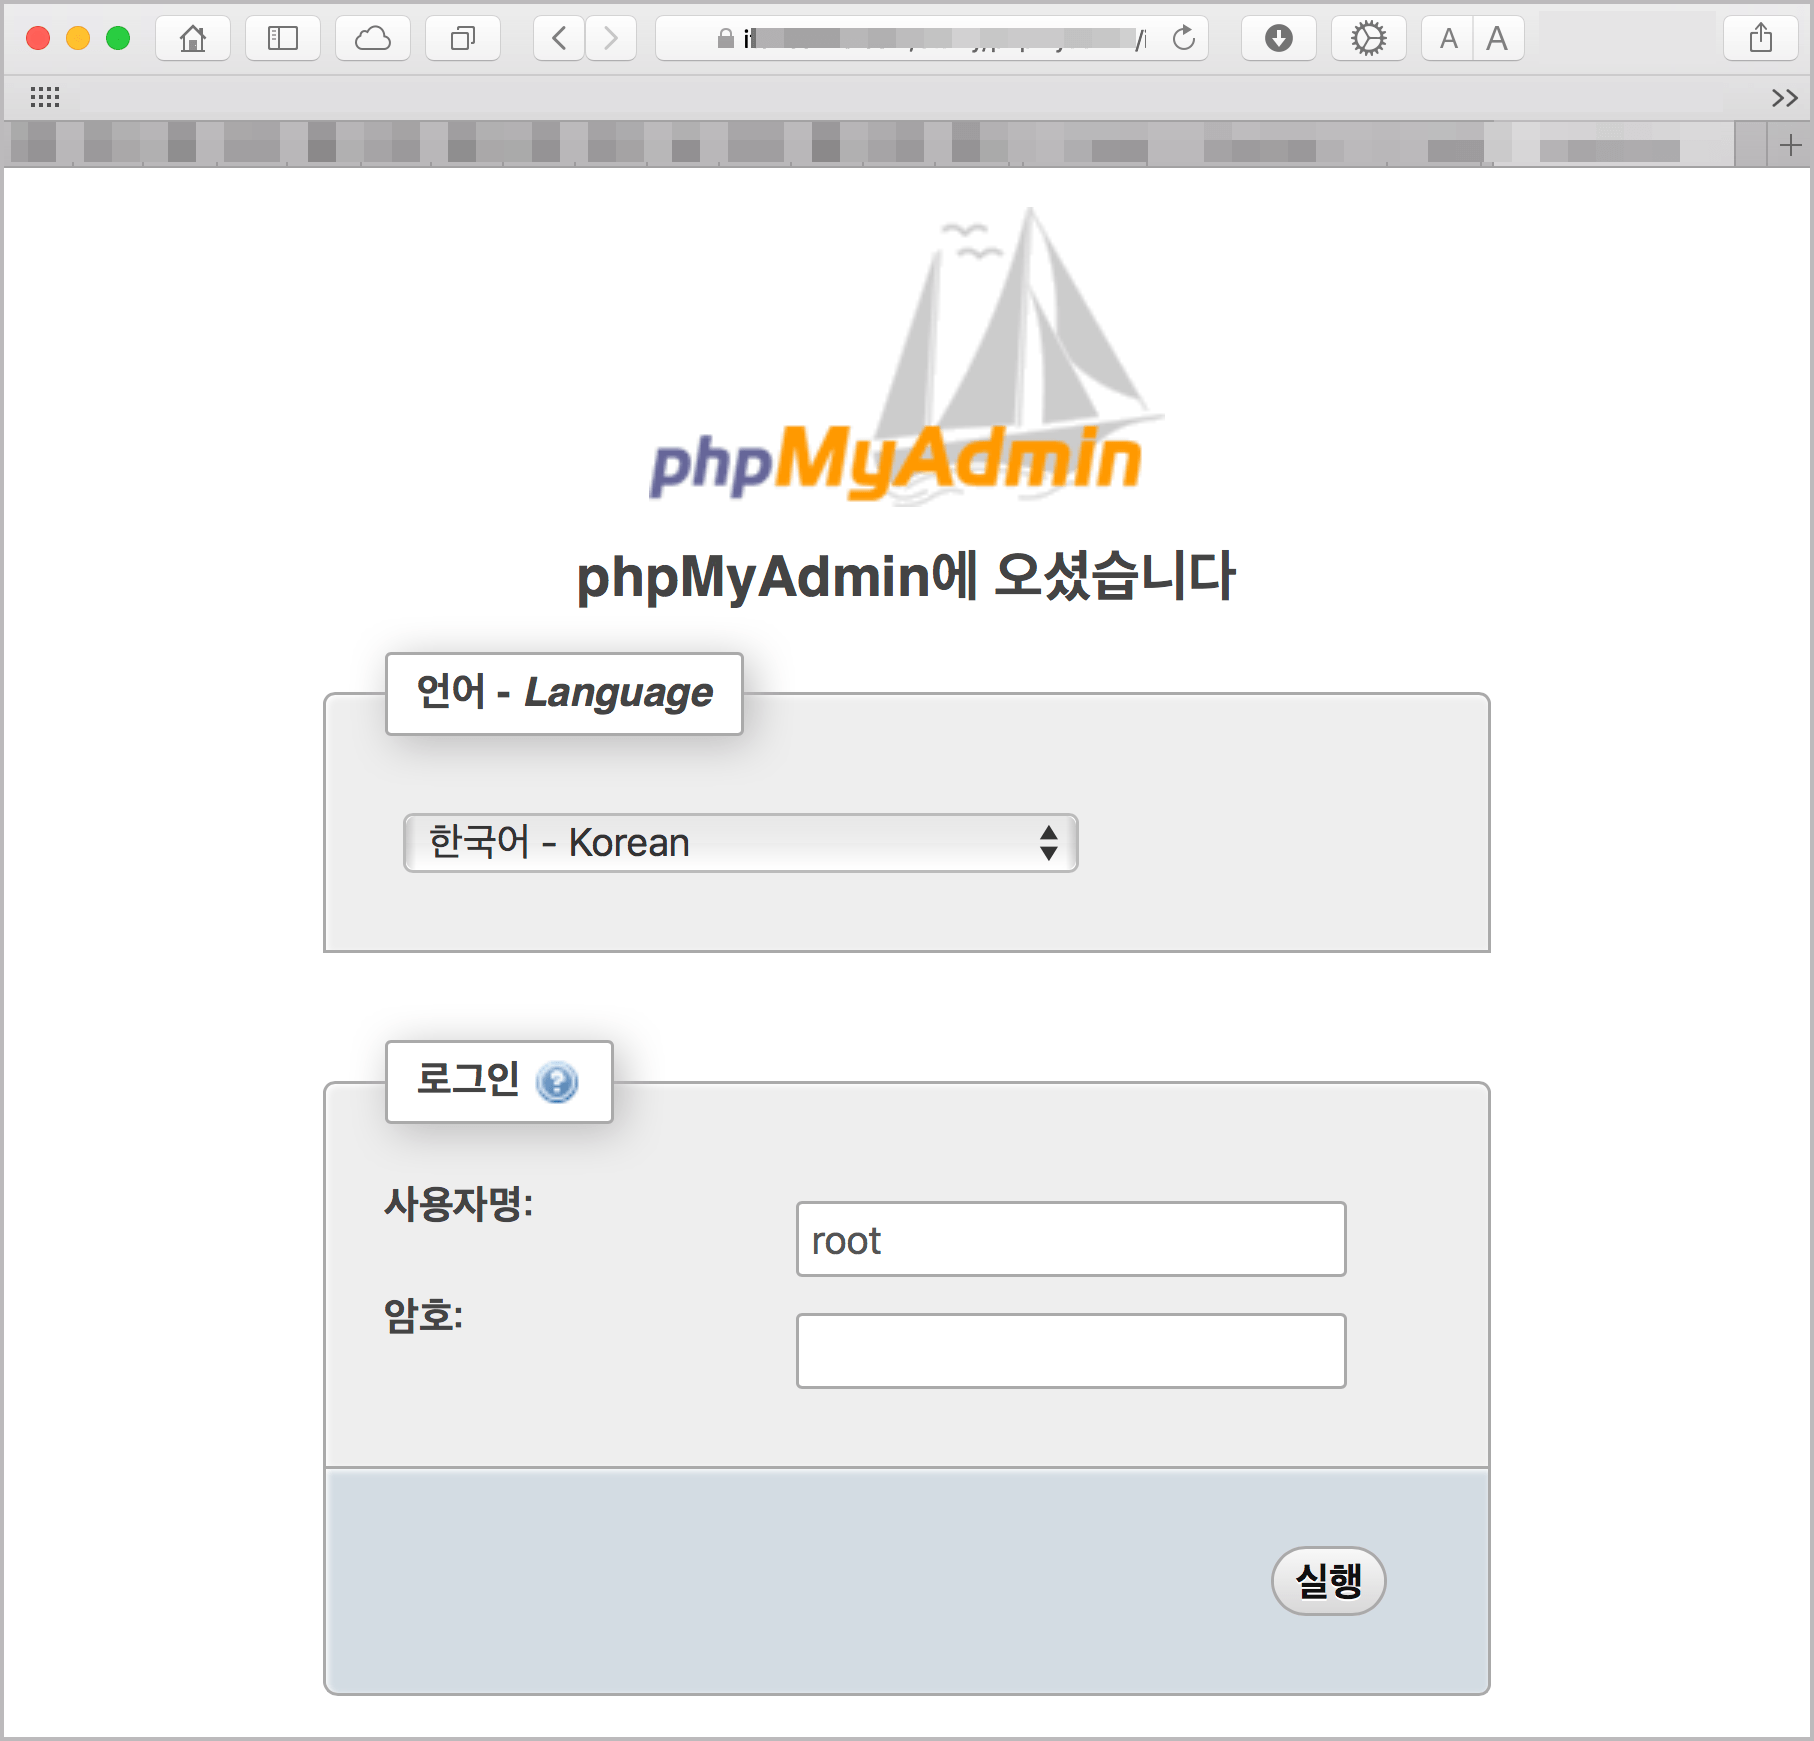 phpMyAdmin 로그인 페이지